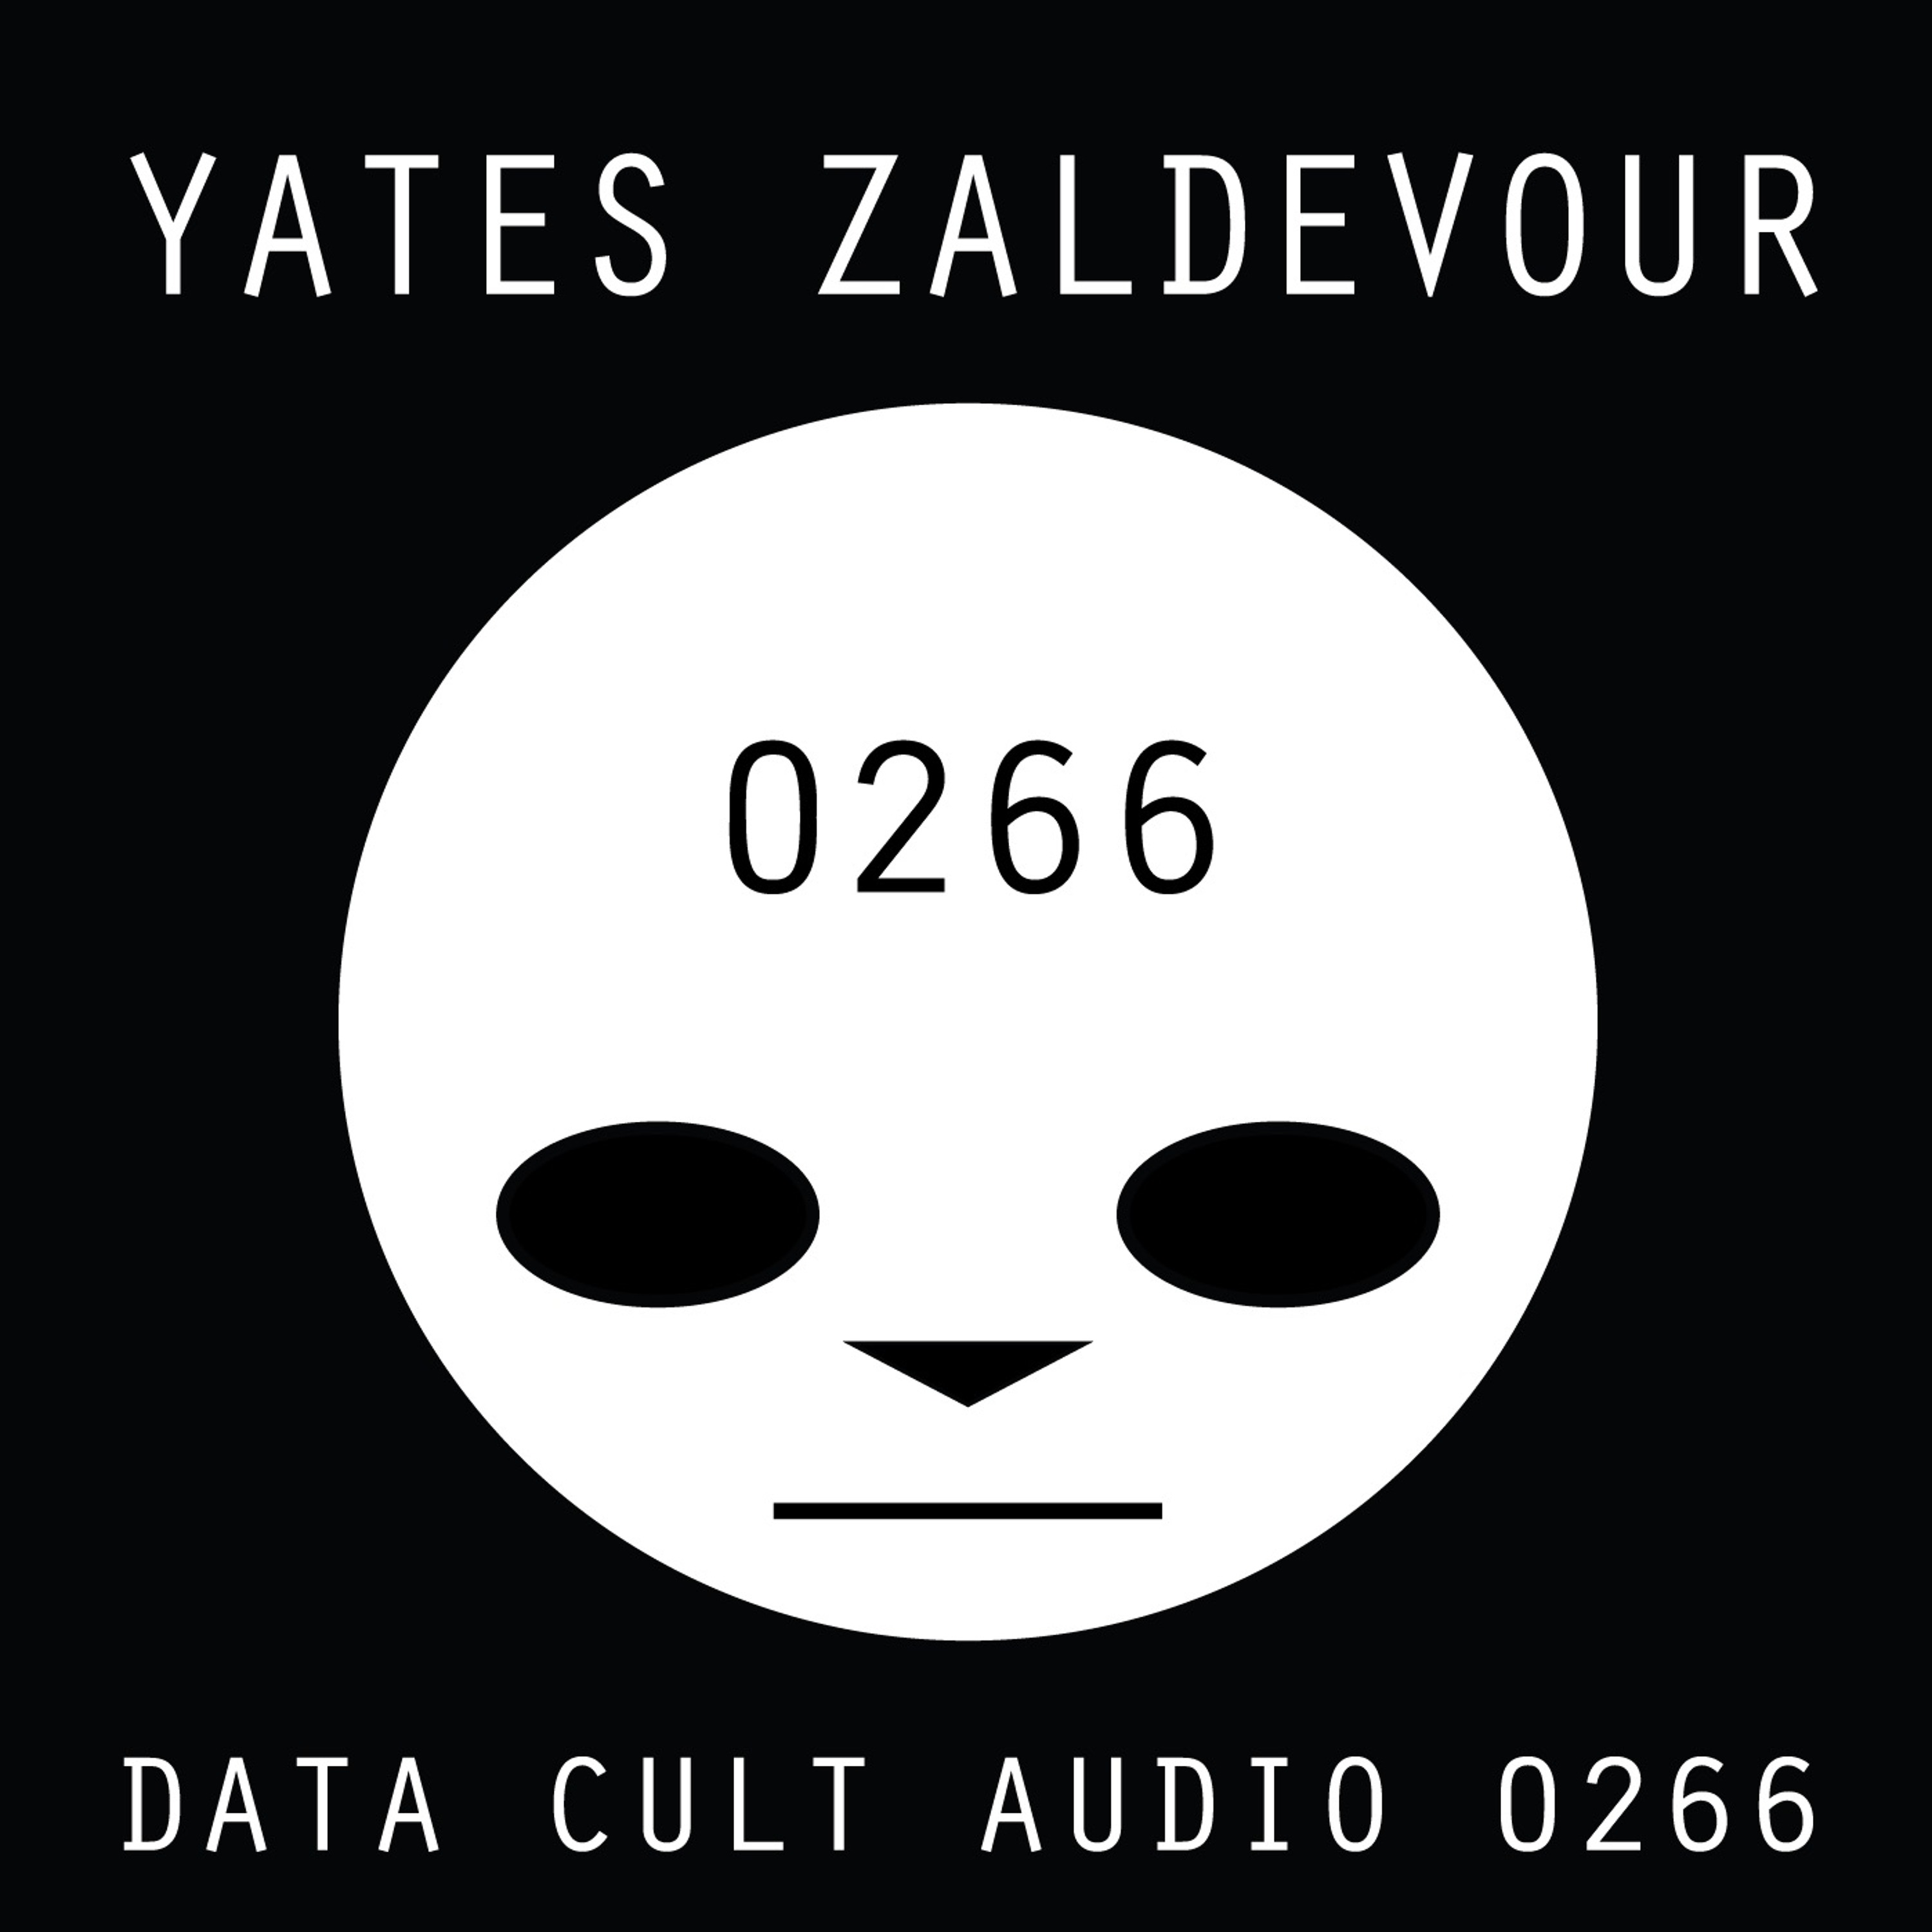 Data Cult Audio 0266 - Yates Zaldevour